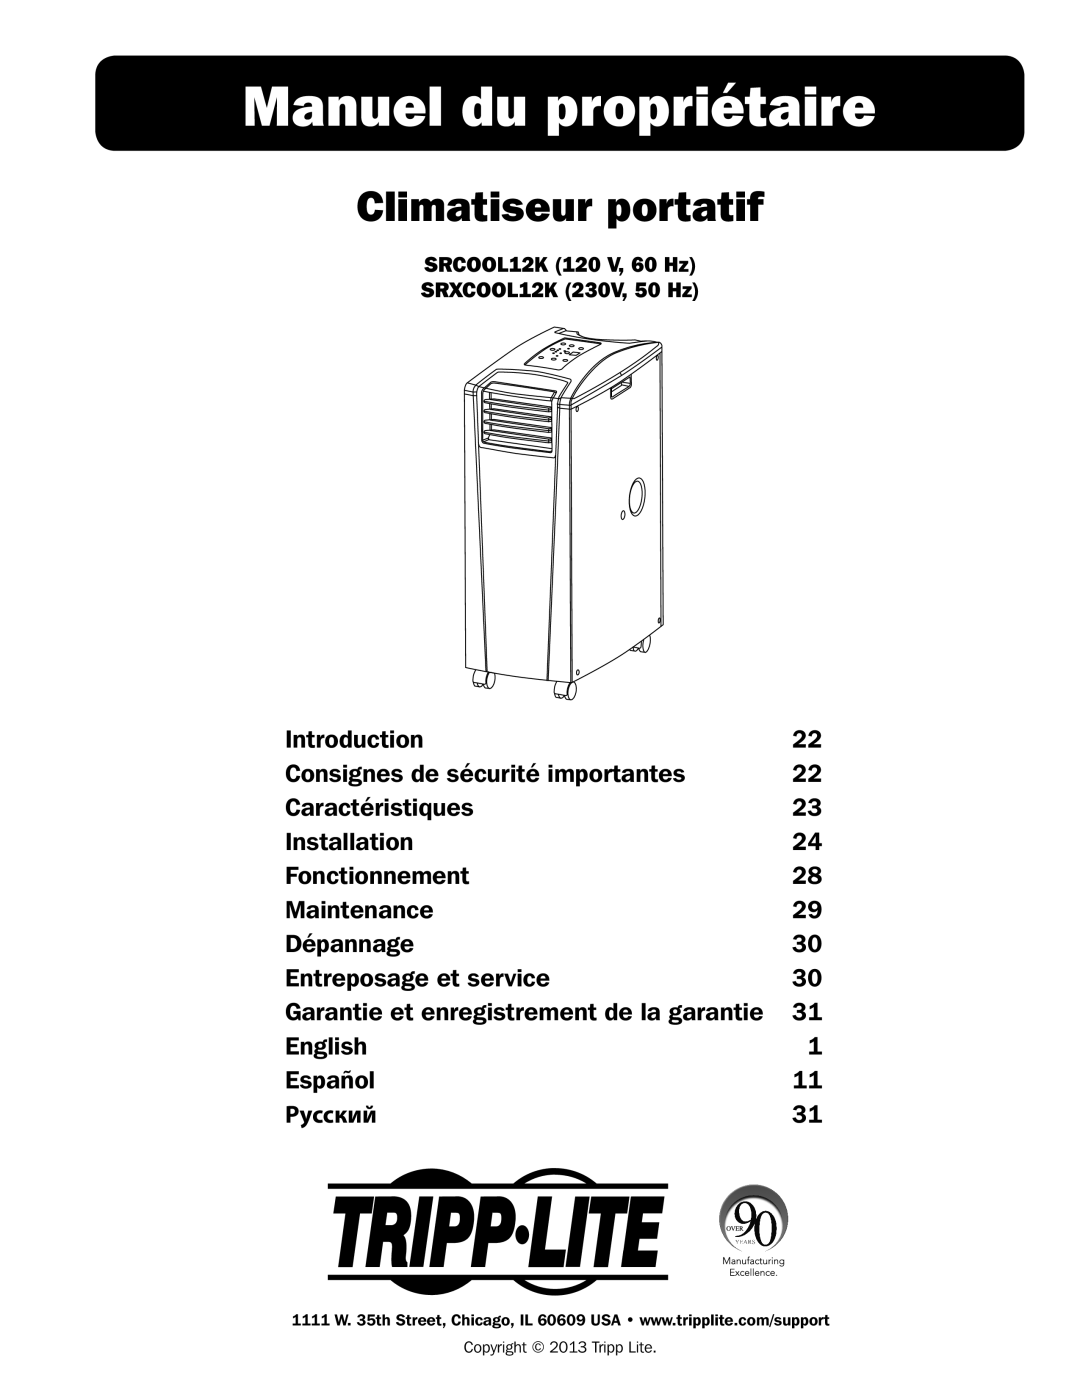 Tripp Lite SRCOOL12K, SRXCOOL12K owner manual Manuel du propriétaire, Climatiseur portatif 